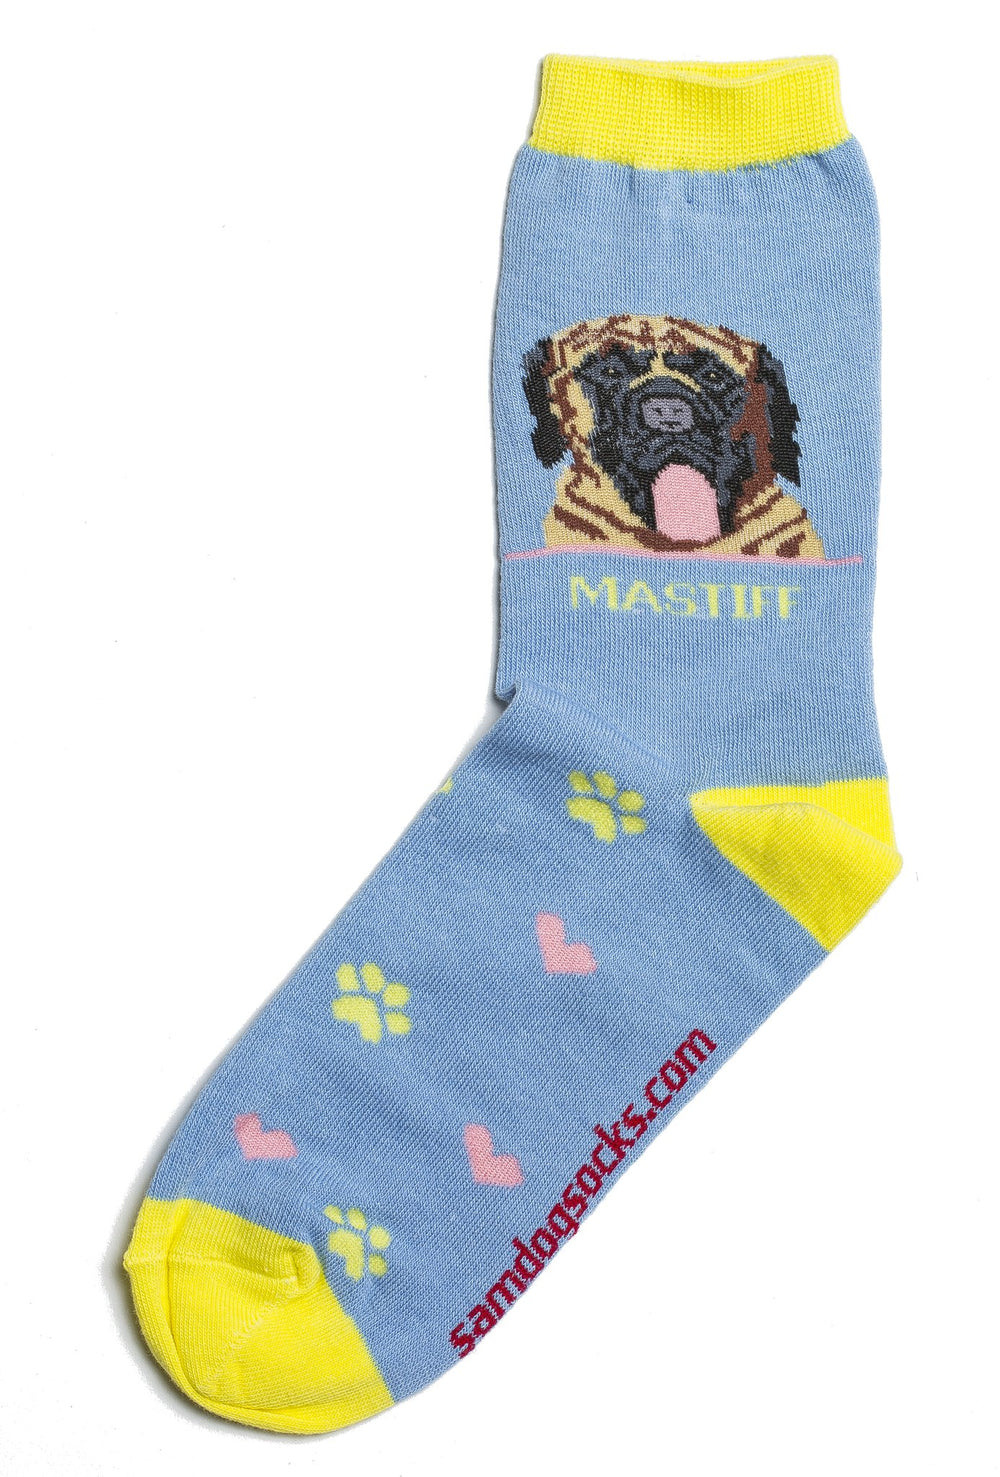 Mastiff socks for women - blue & yellow